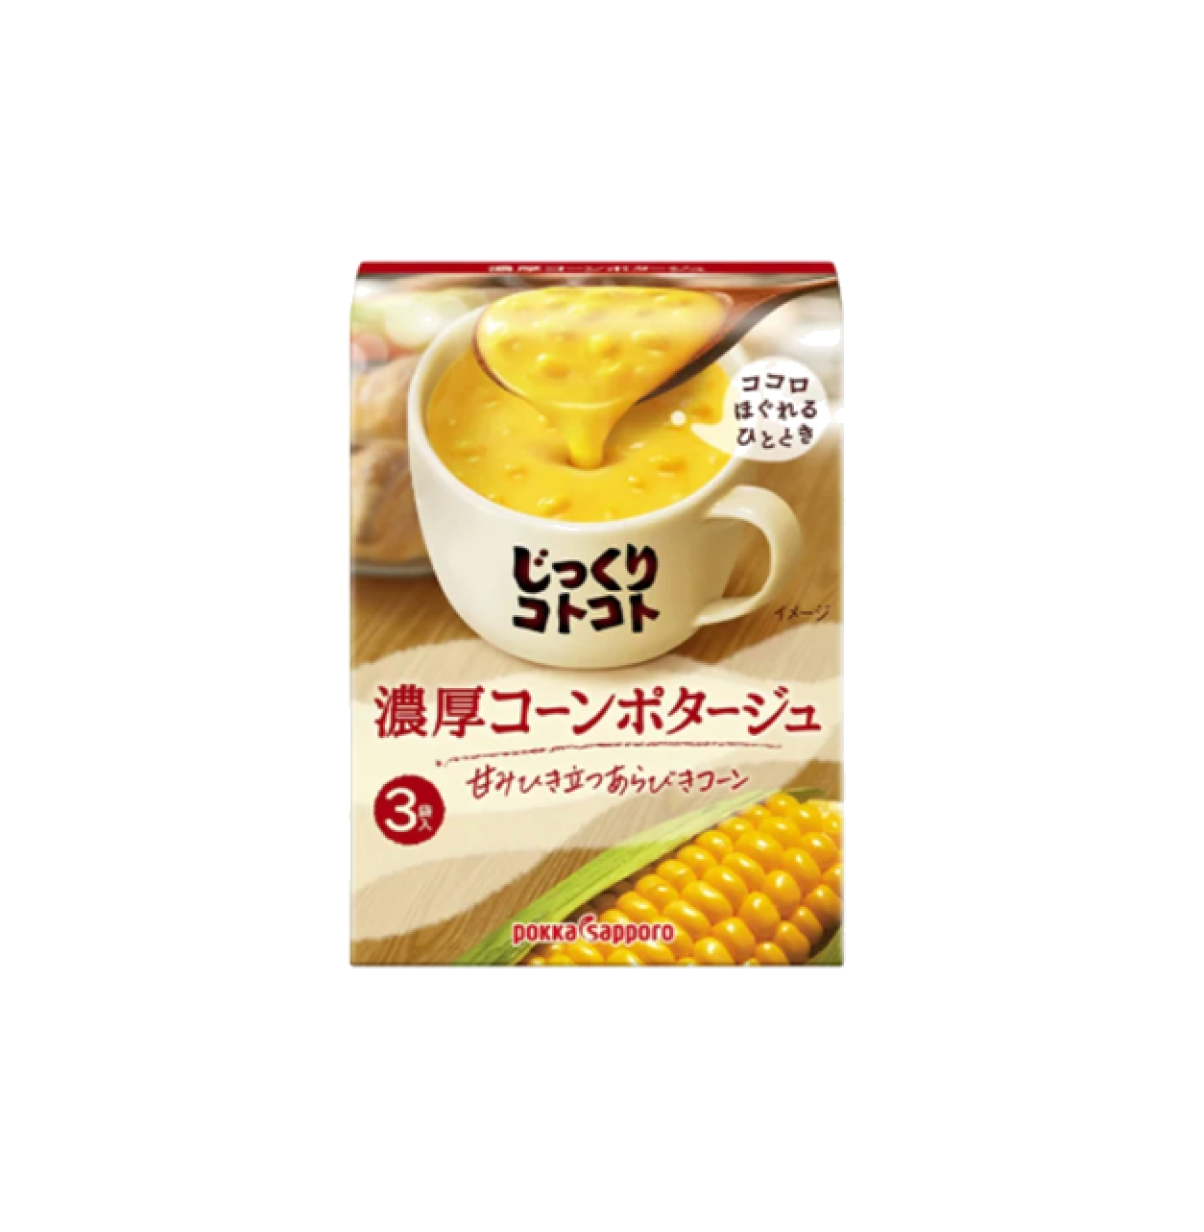 Pokka Sapporo 玉米濃湯 3袋入 69g